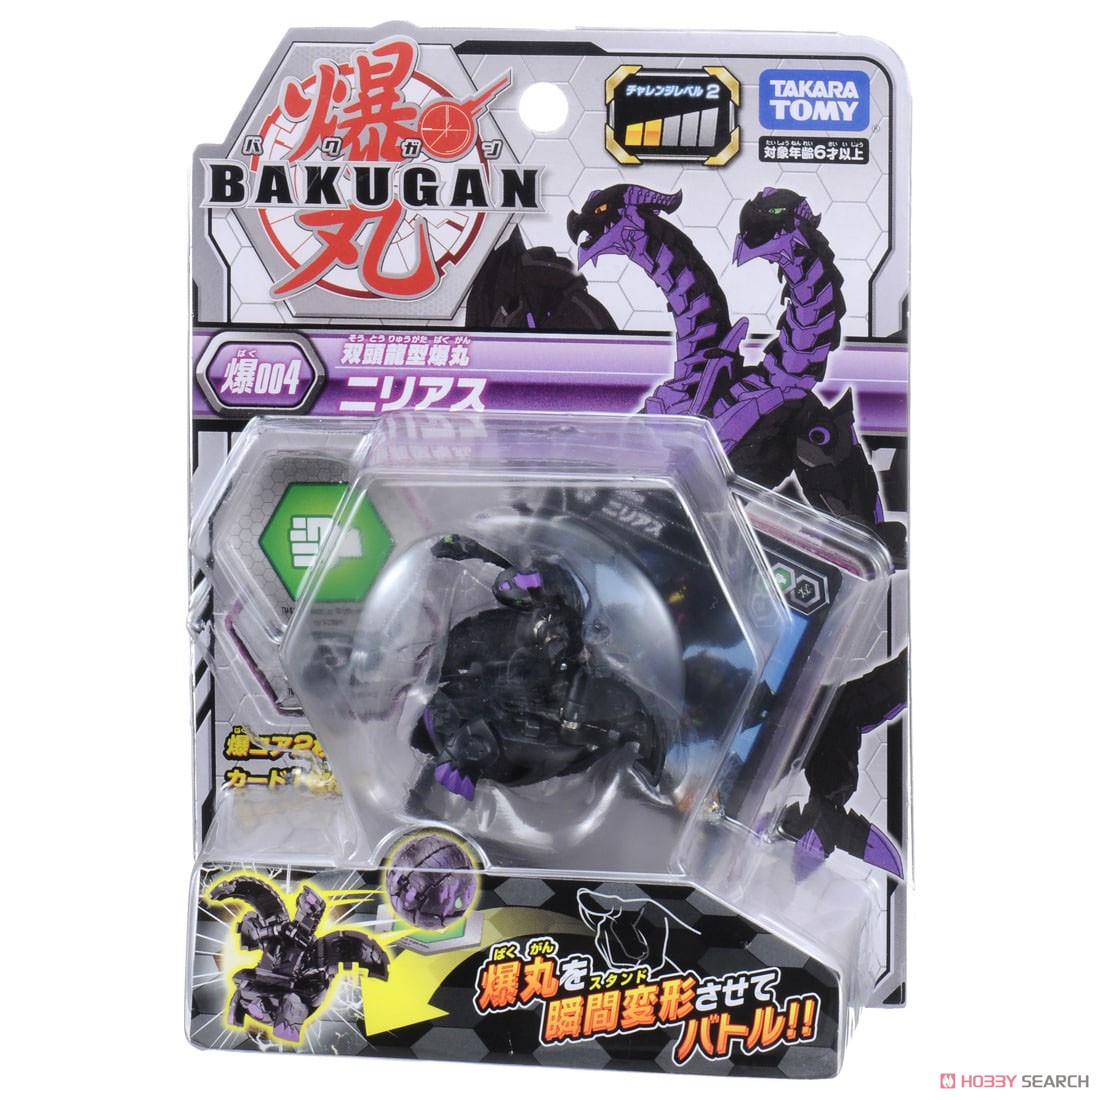 Baku004 Bakugan (Character Toy) Package1